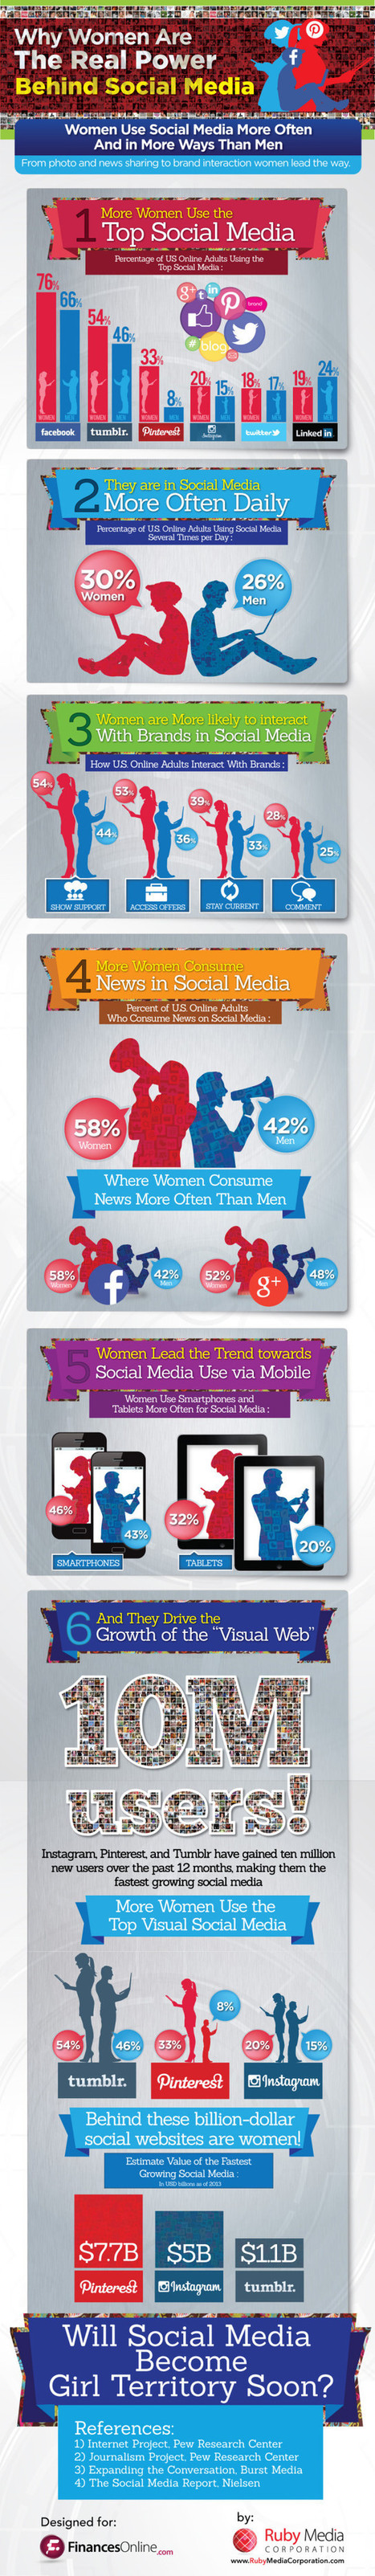 Real Power Behind Social Media? Women [Infographic] - Marketing Technology Blog | Social Marketing Revolution | Scoop.it